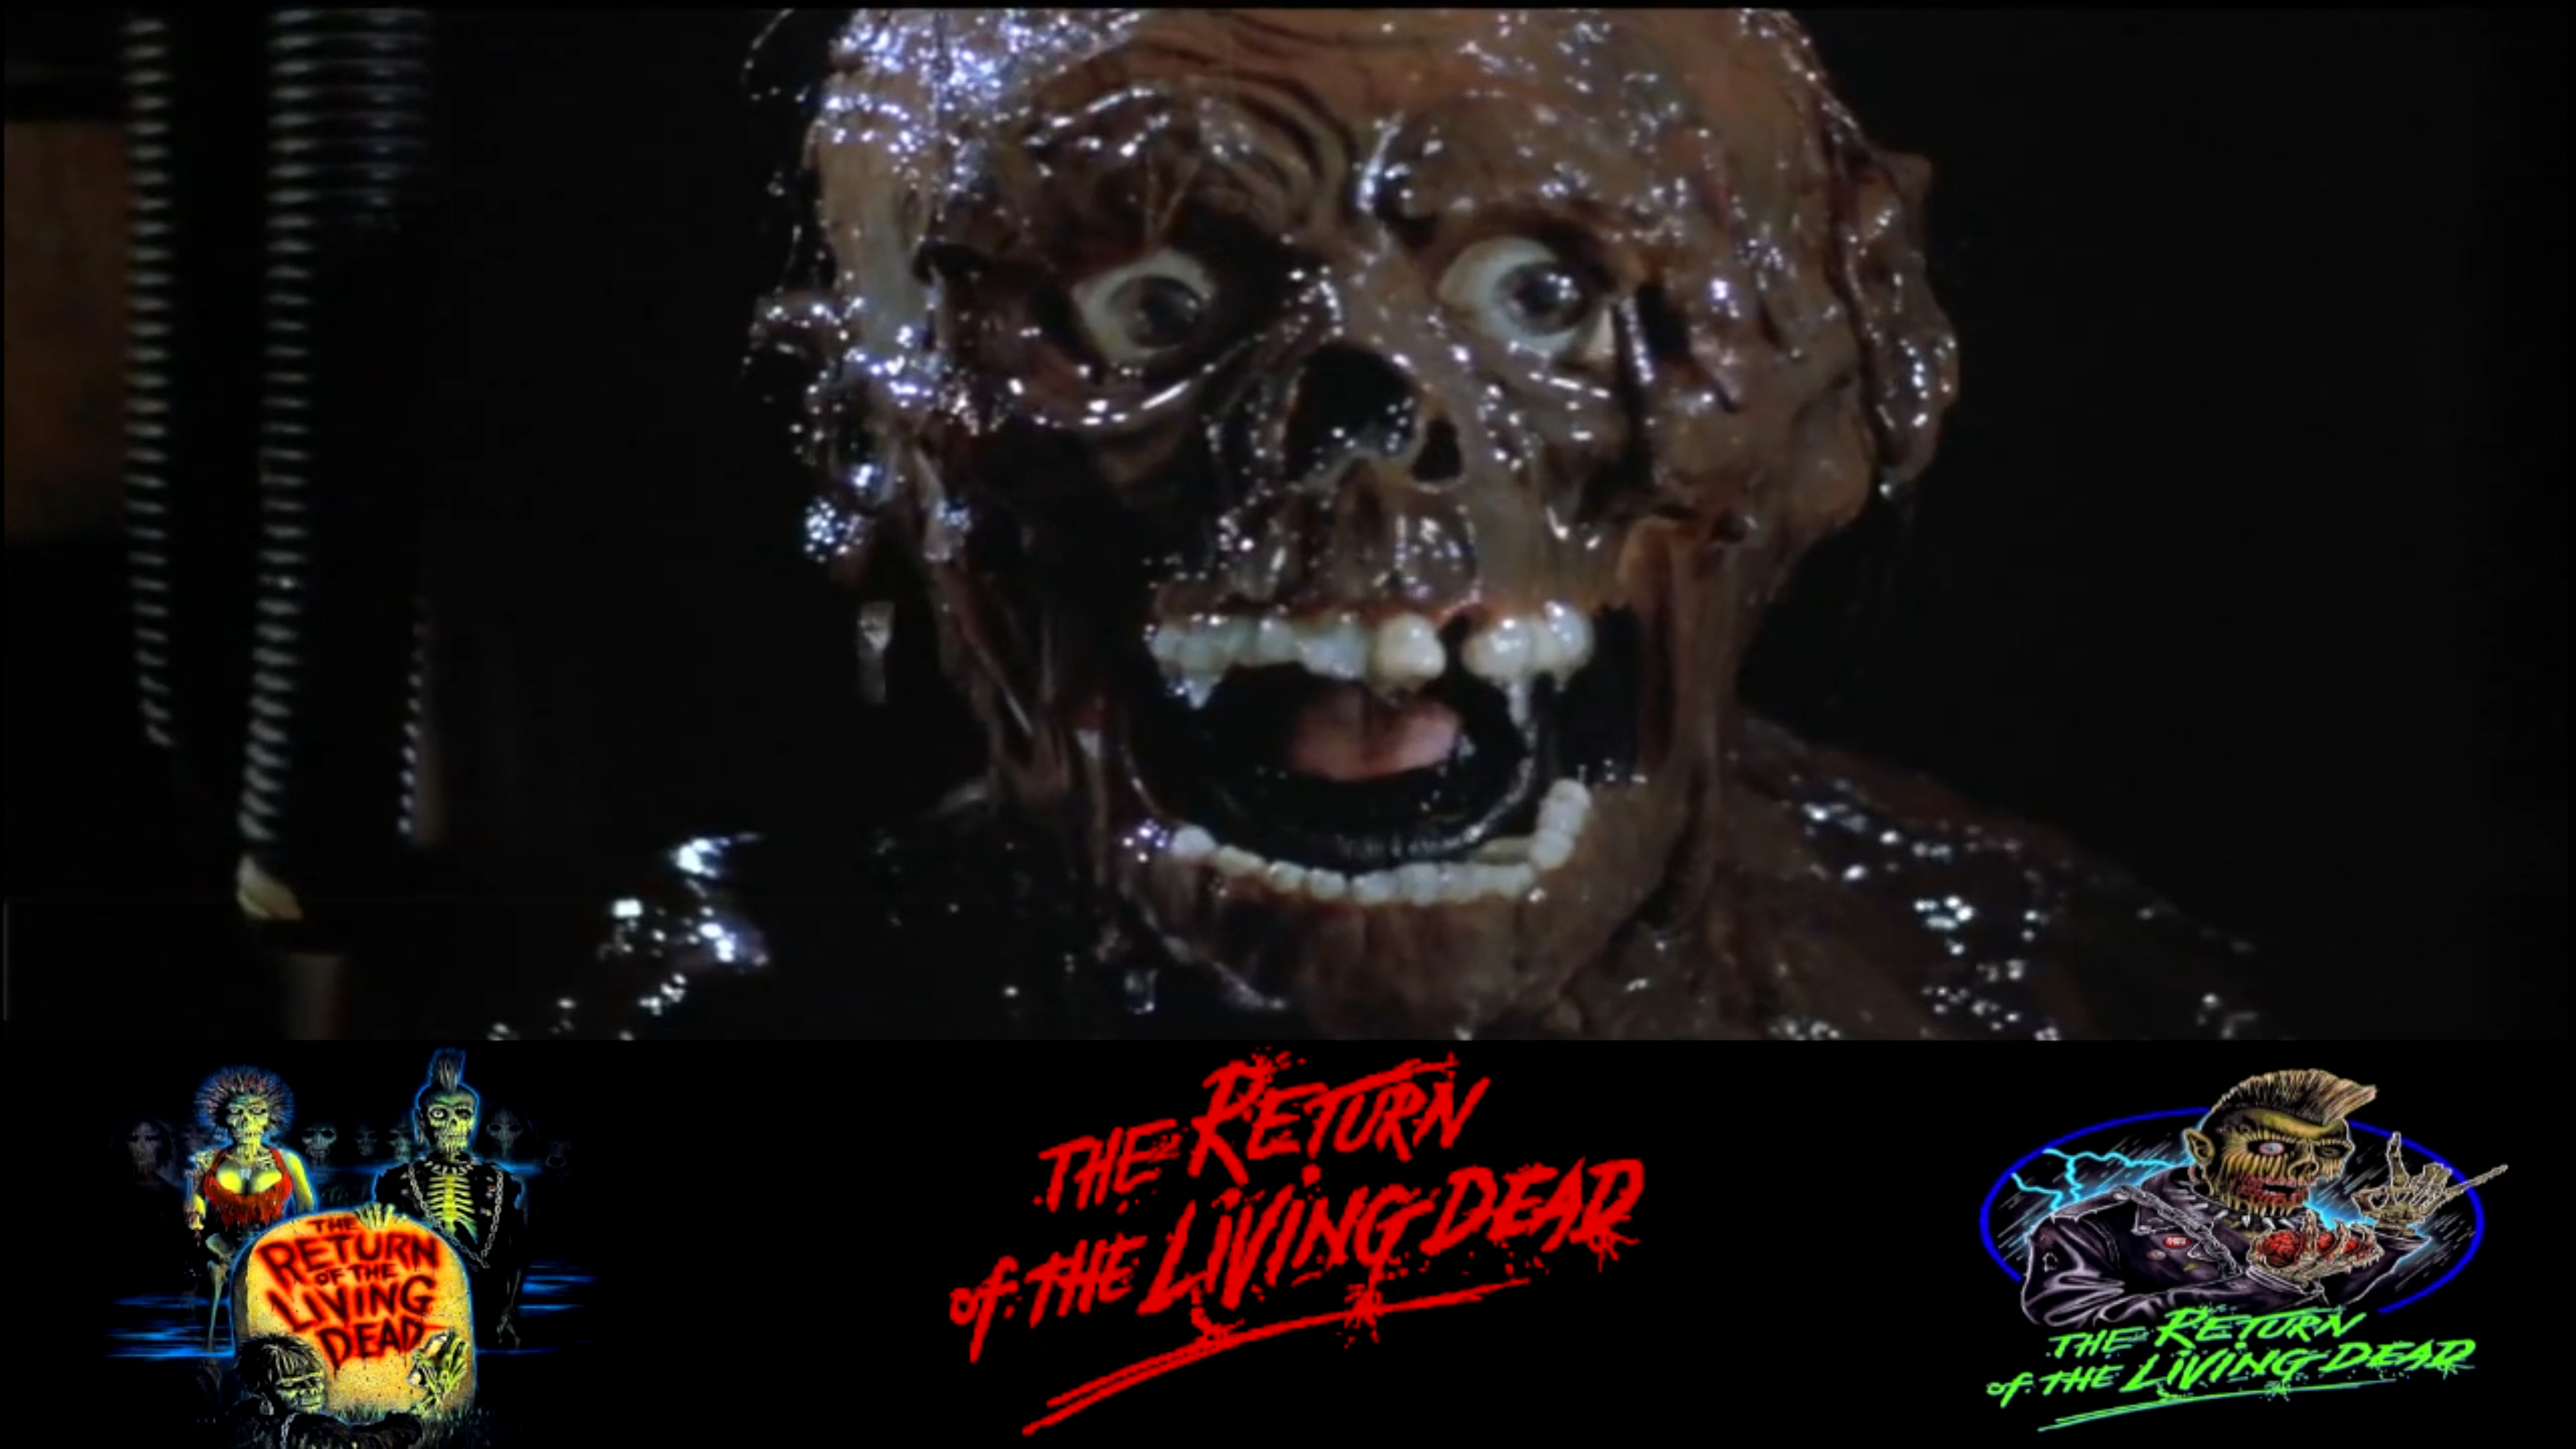 The Return of The Living Dead - Video DMD - FullDMD Videos 